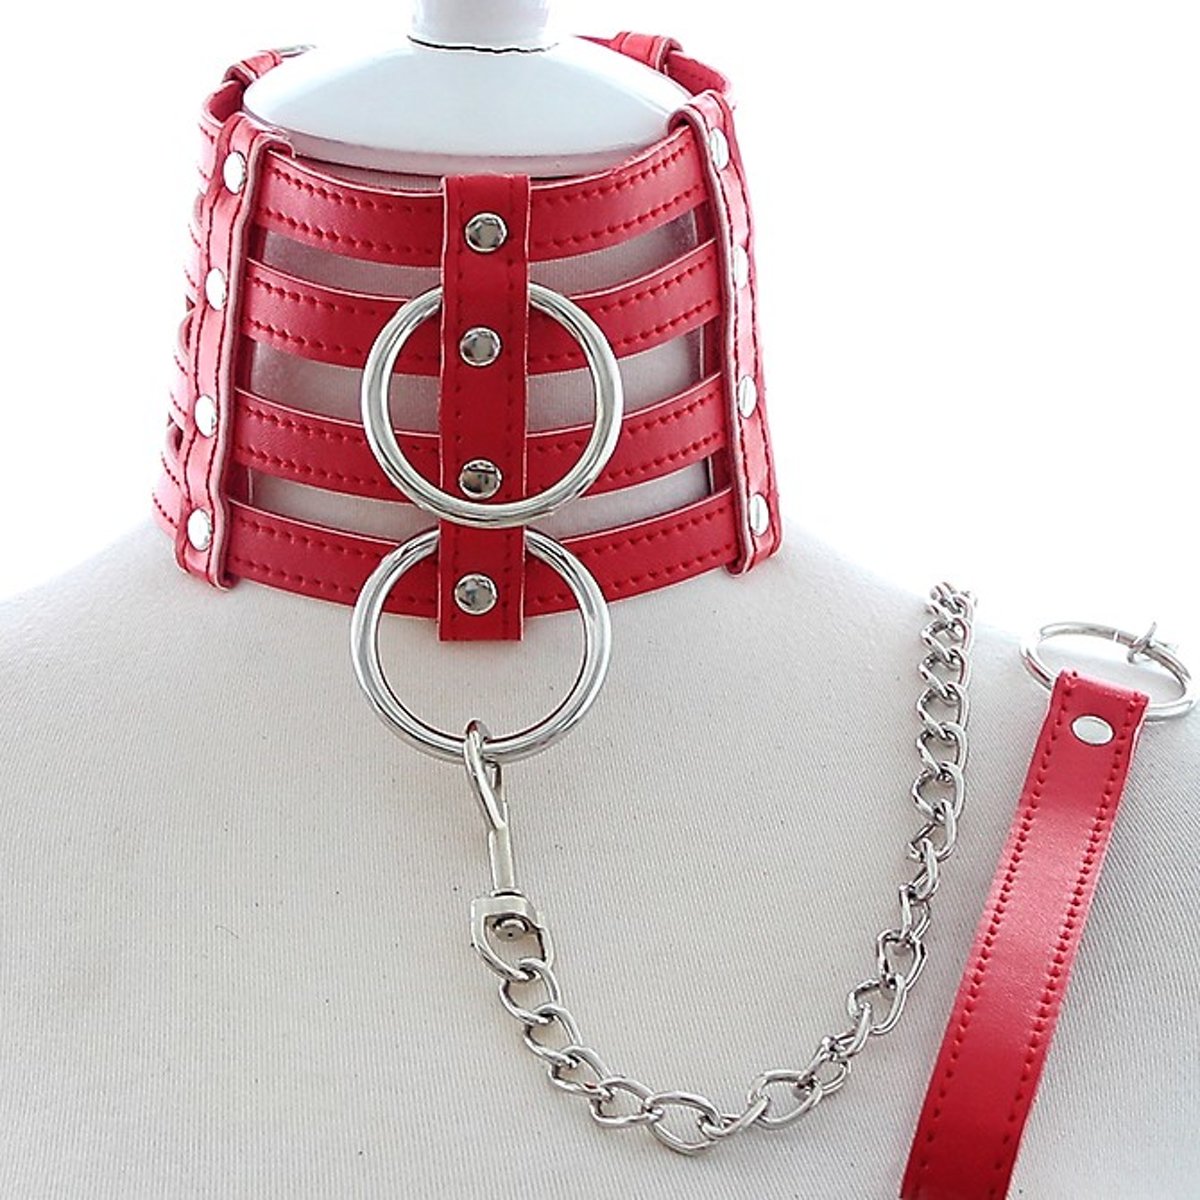 Foto van Banoch - Collar & Leash Flamboyante Red - rode pu leren halsband met riem - bdsm